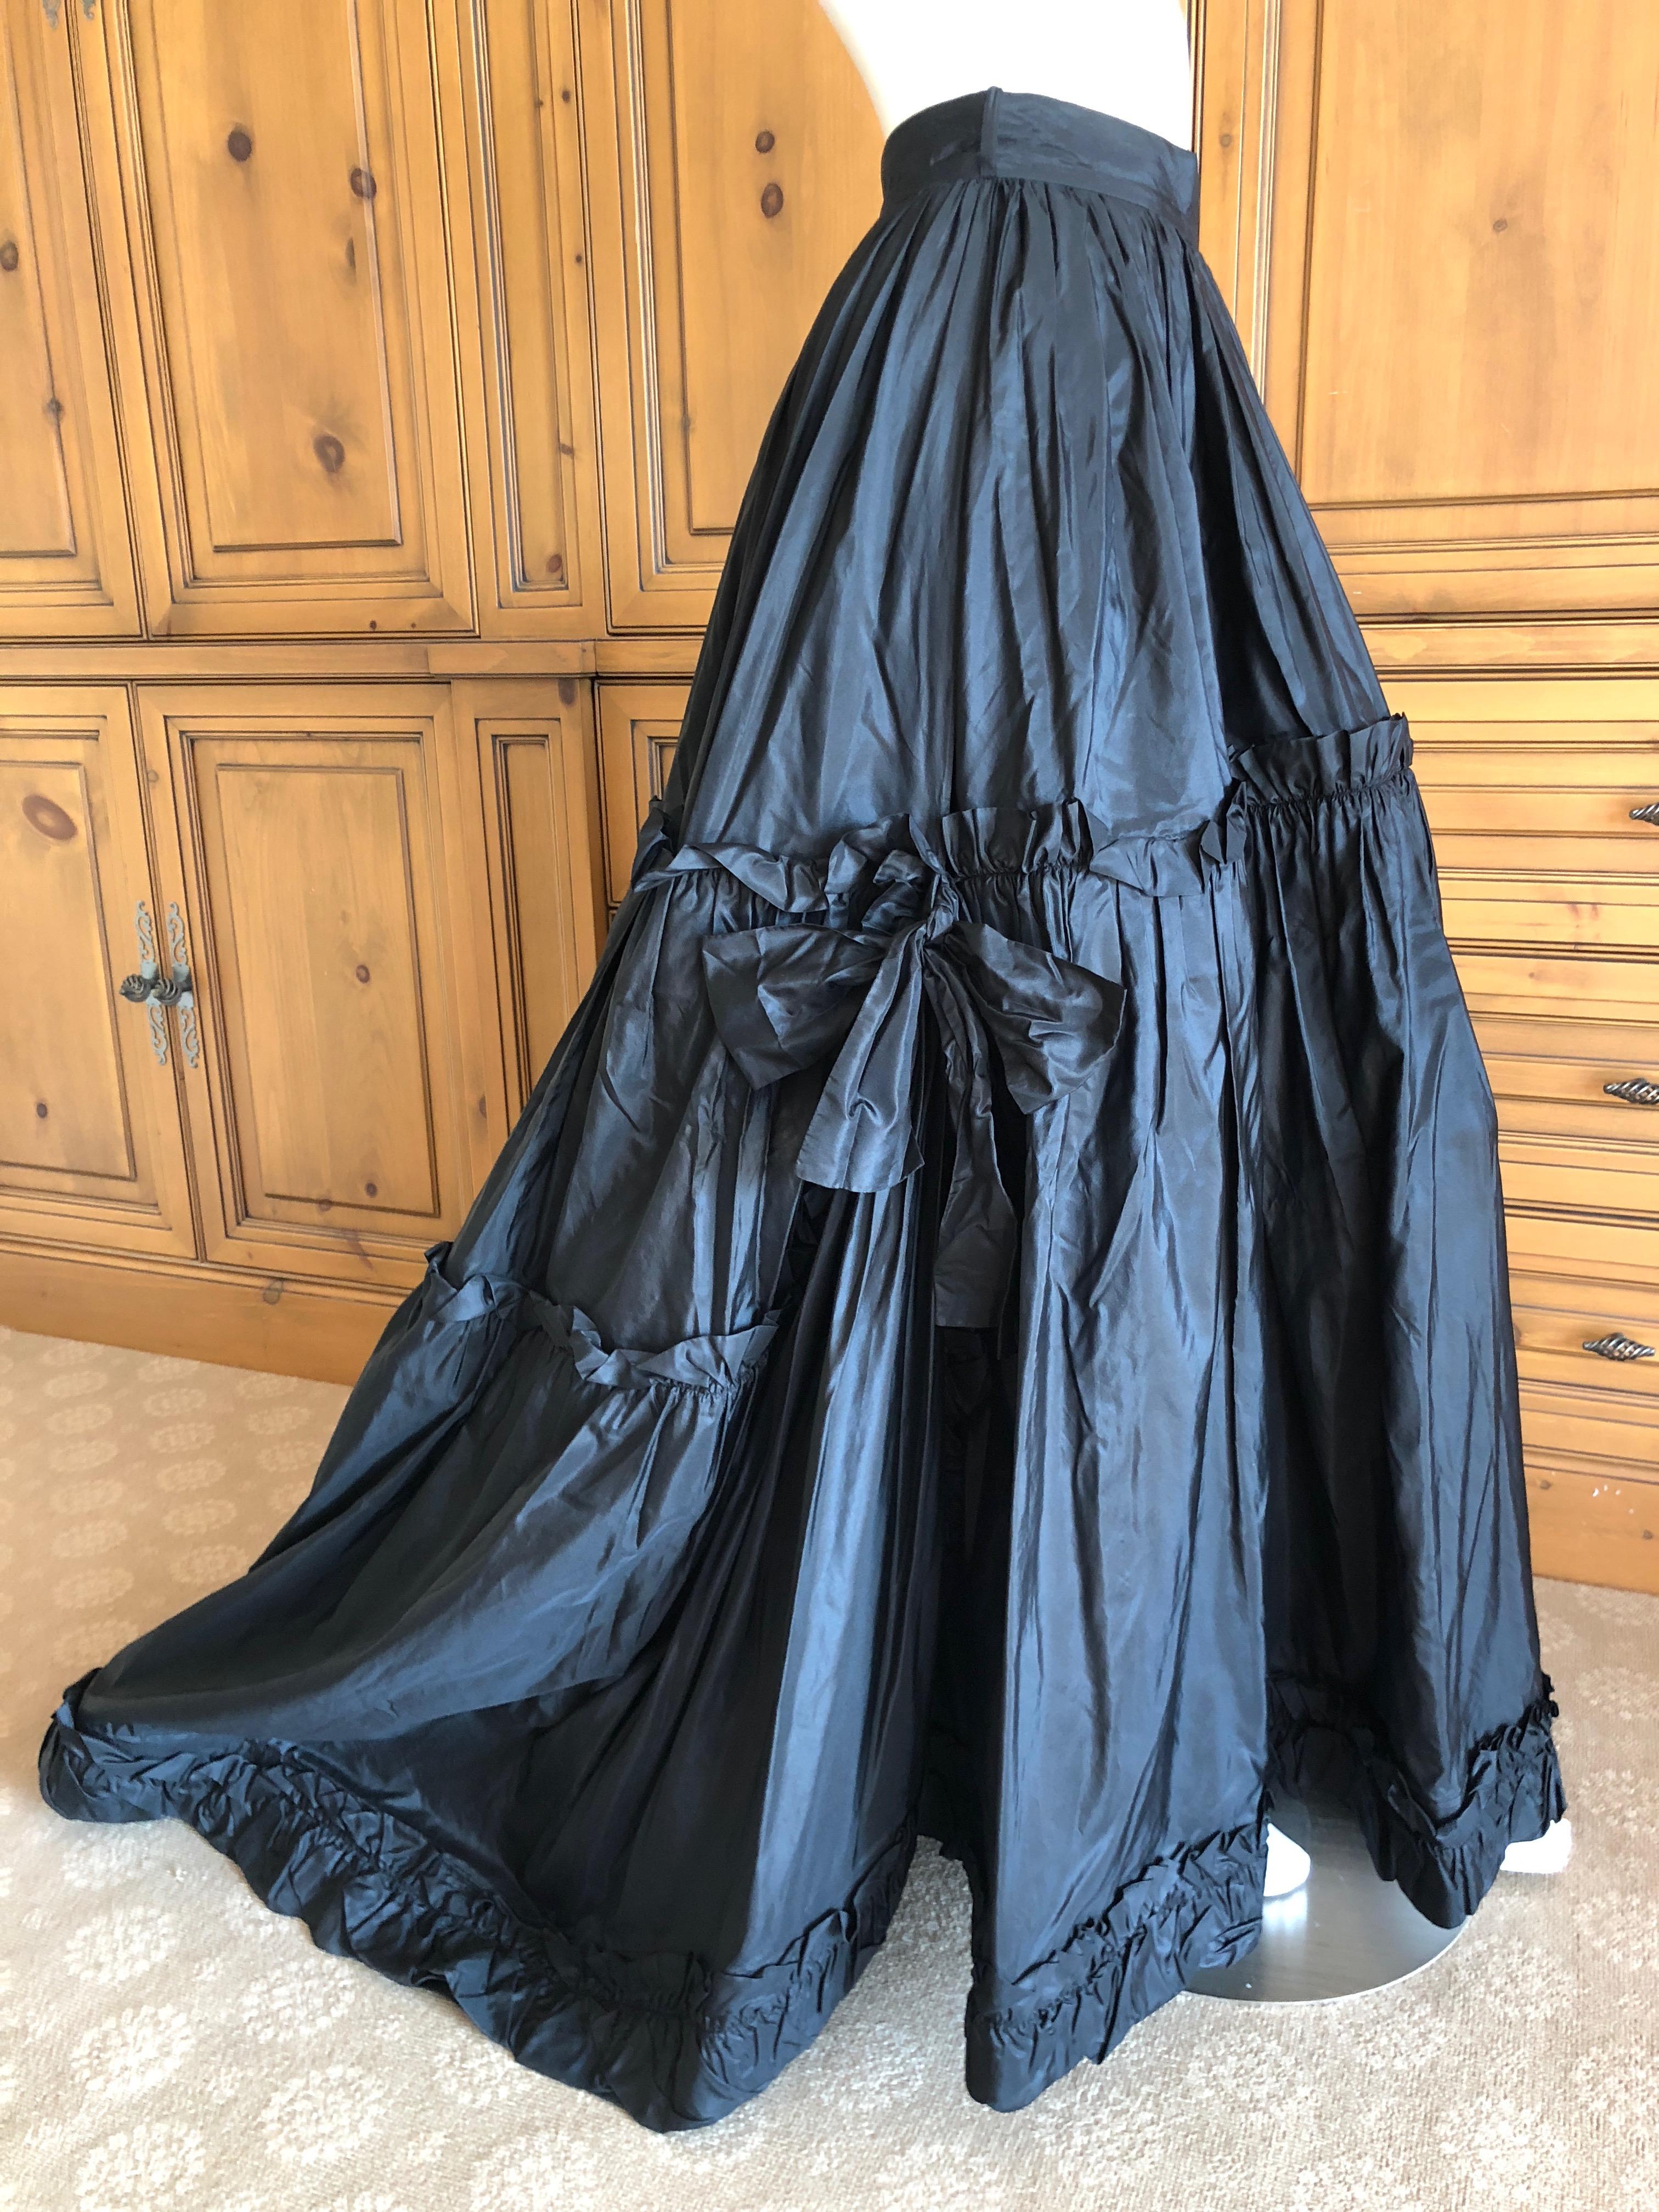 Yves Saint Laurent Rive Guache 1982 Dramatic Black Taffeta Ball Skirt with Train For Sale 2